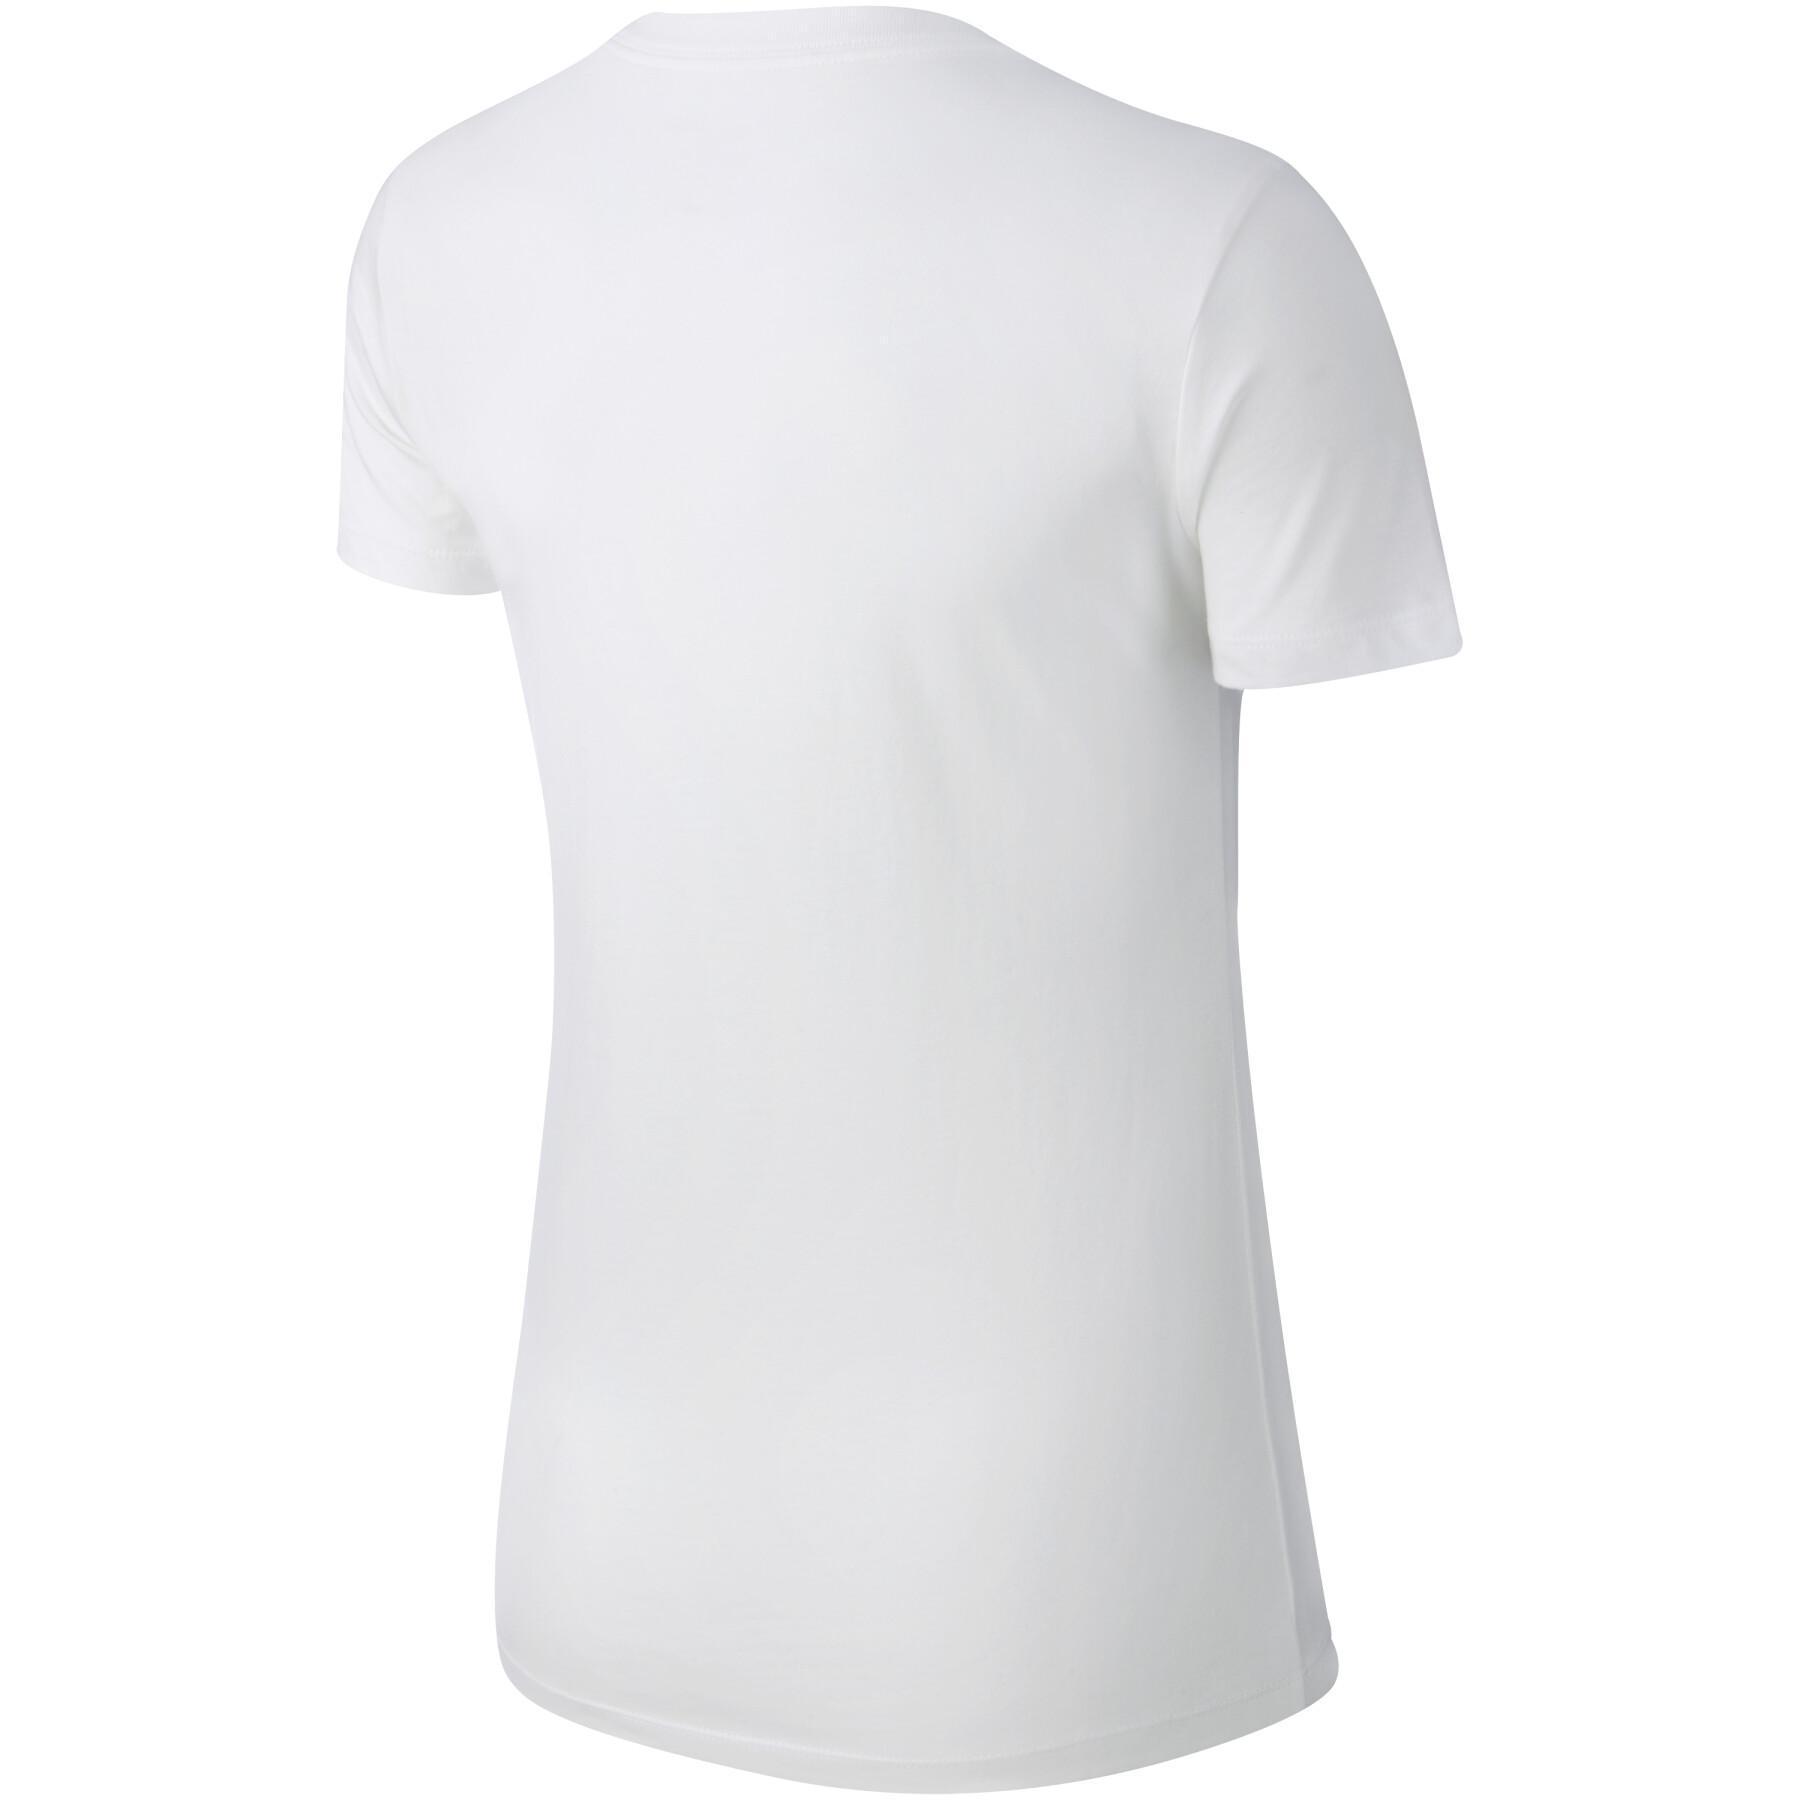 Dames-T-shirt Nike sportswear essential